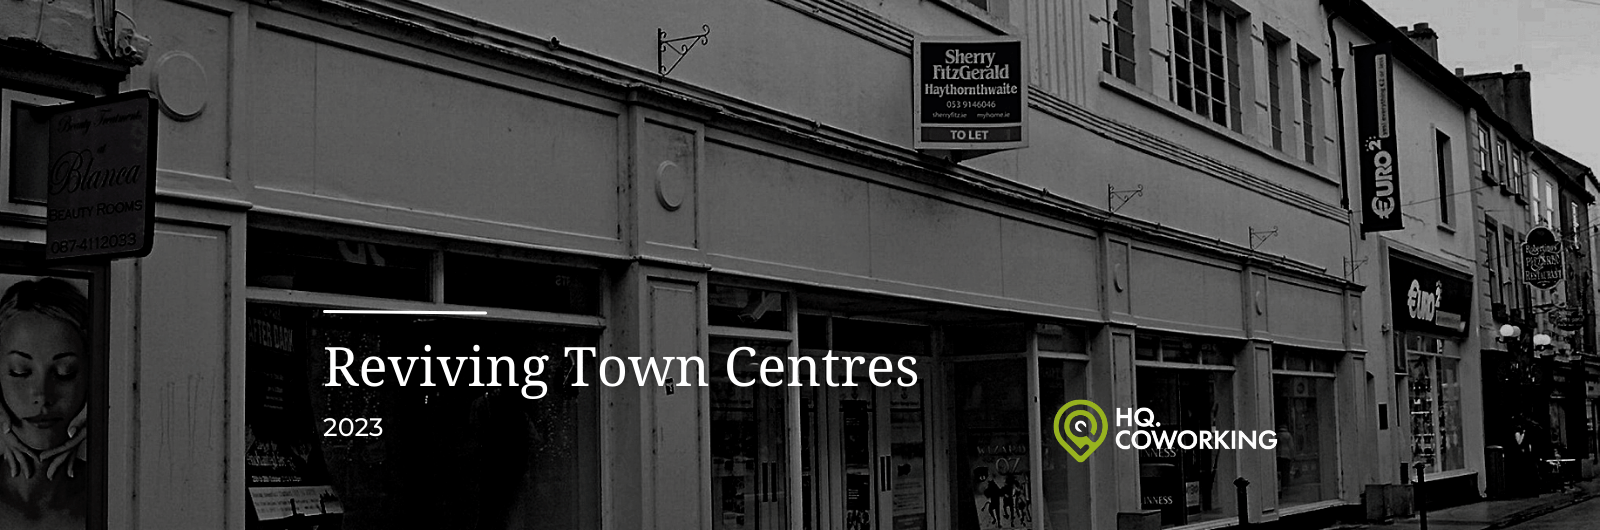 Reviving Town Centres